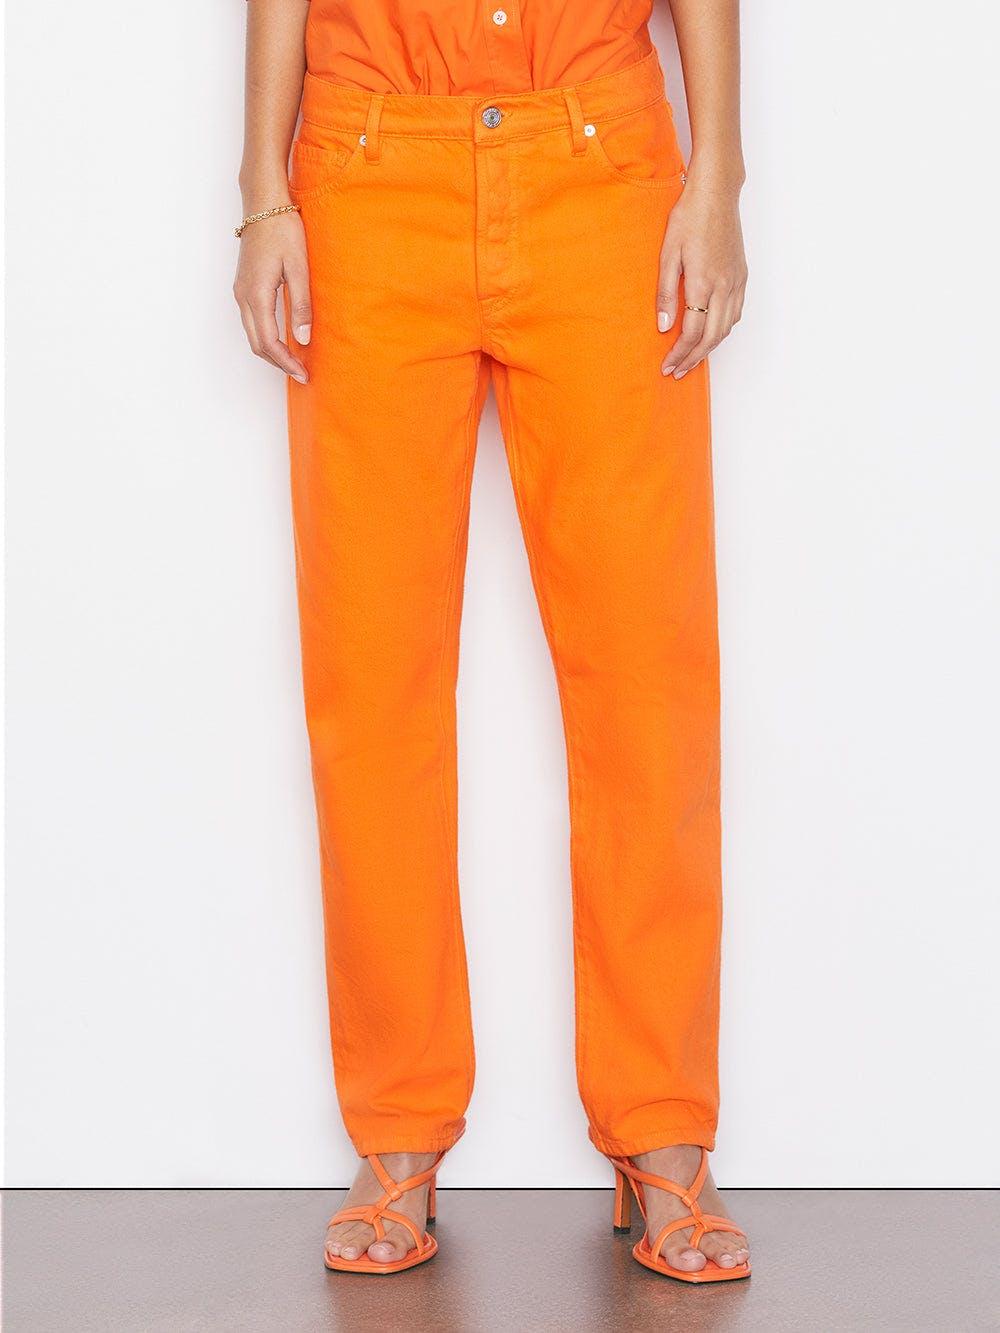 FRAME Denim Le Slouch Jean in Orange - Save 29% - Lyst